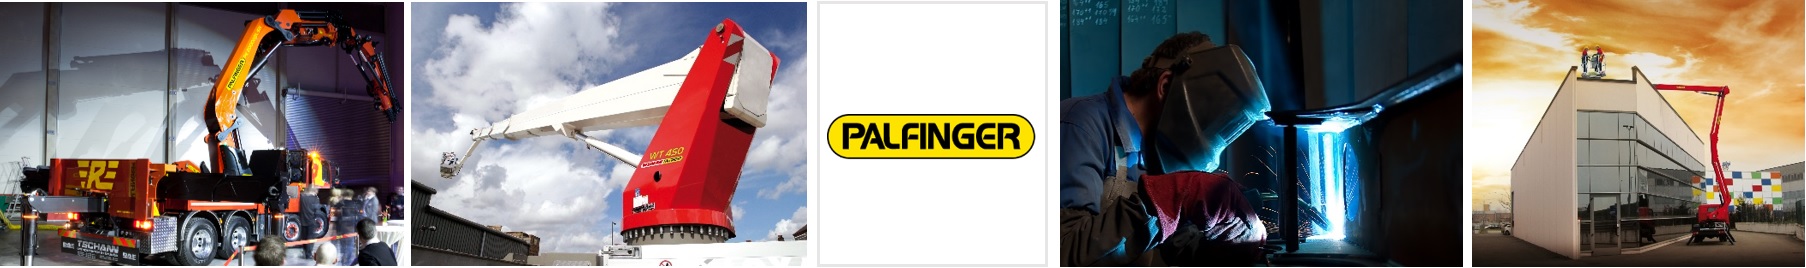 Palfinger news